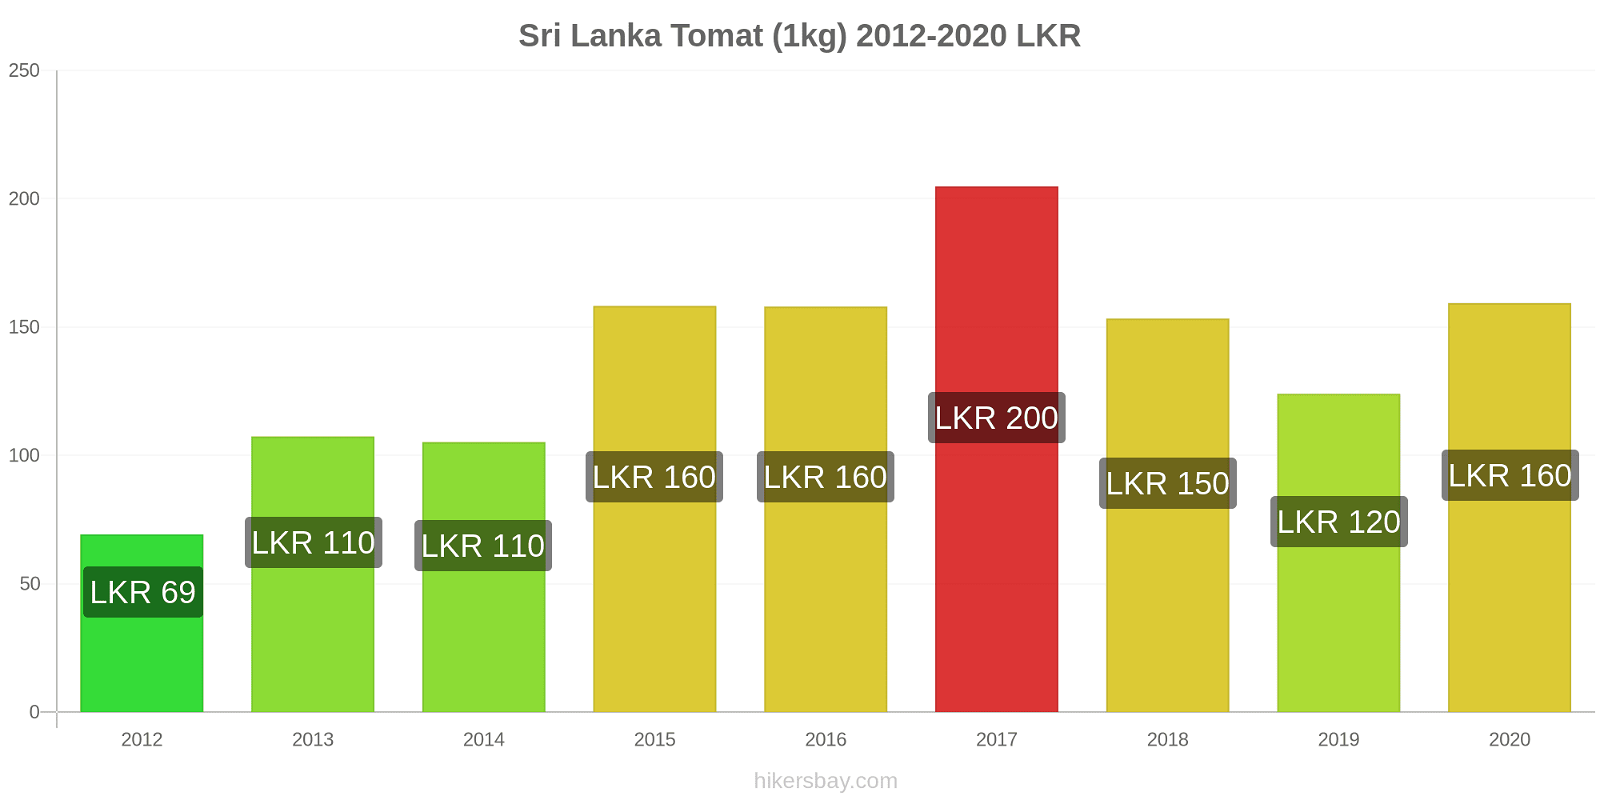 Sri Lanka perubahan harga Tomat (1kg) hikersbay.com